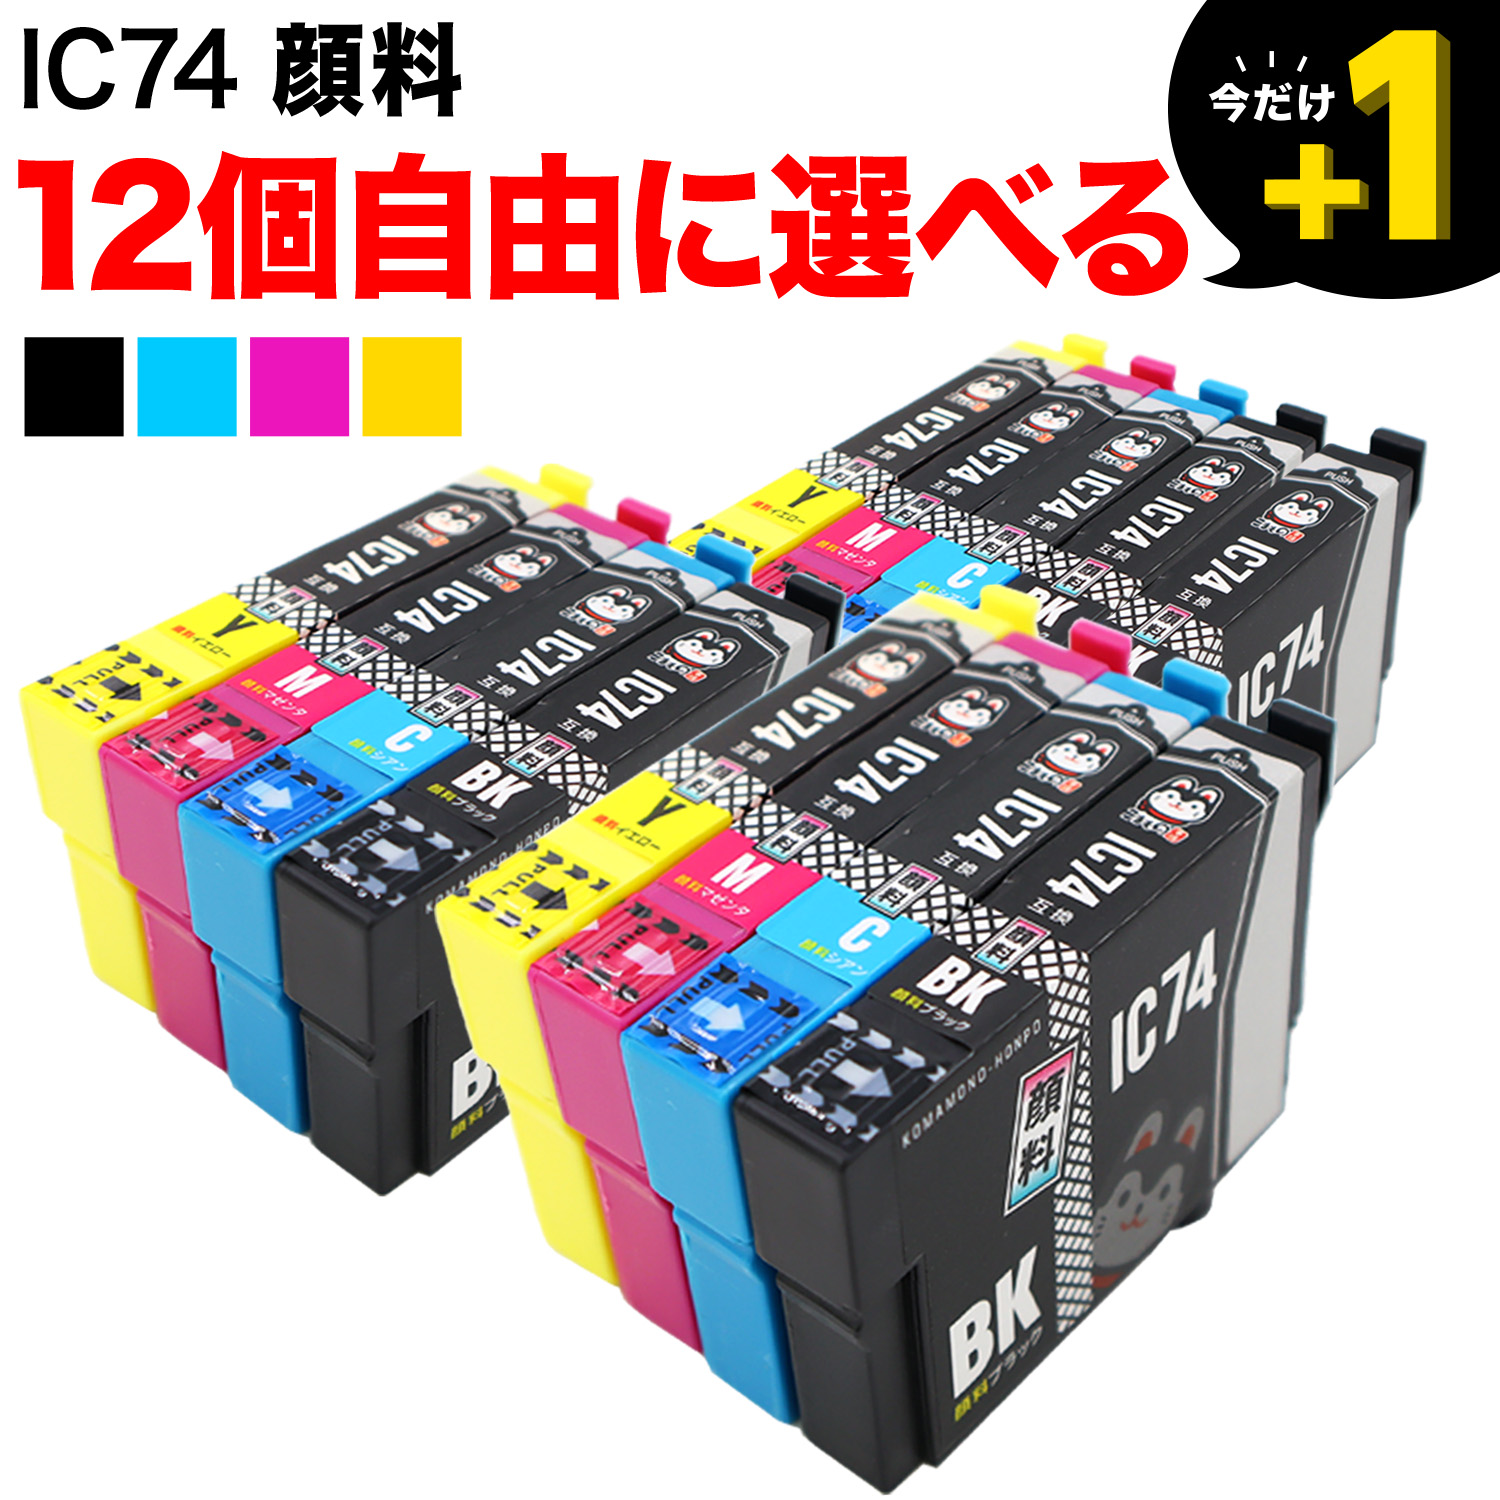 IC74 エプソン用 互換インク 顔料 自由選択12個セット フリーチョイス